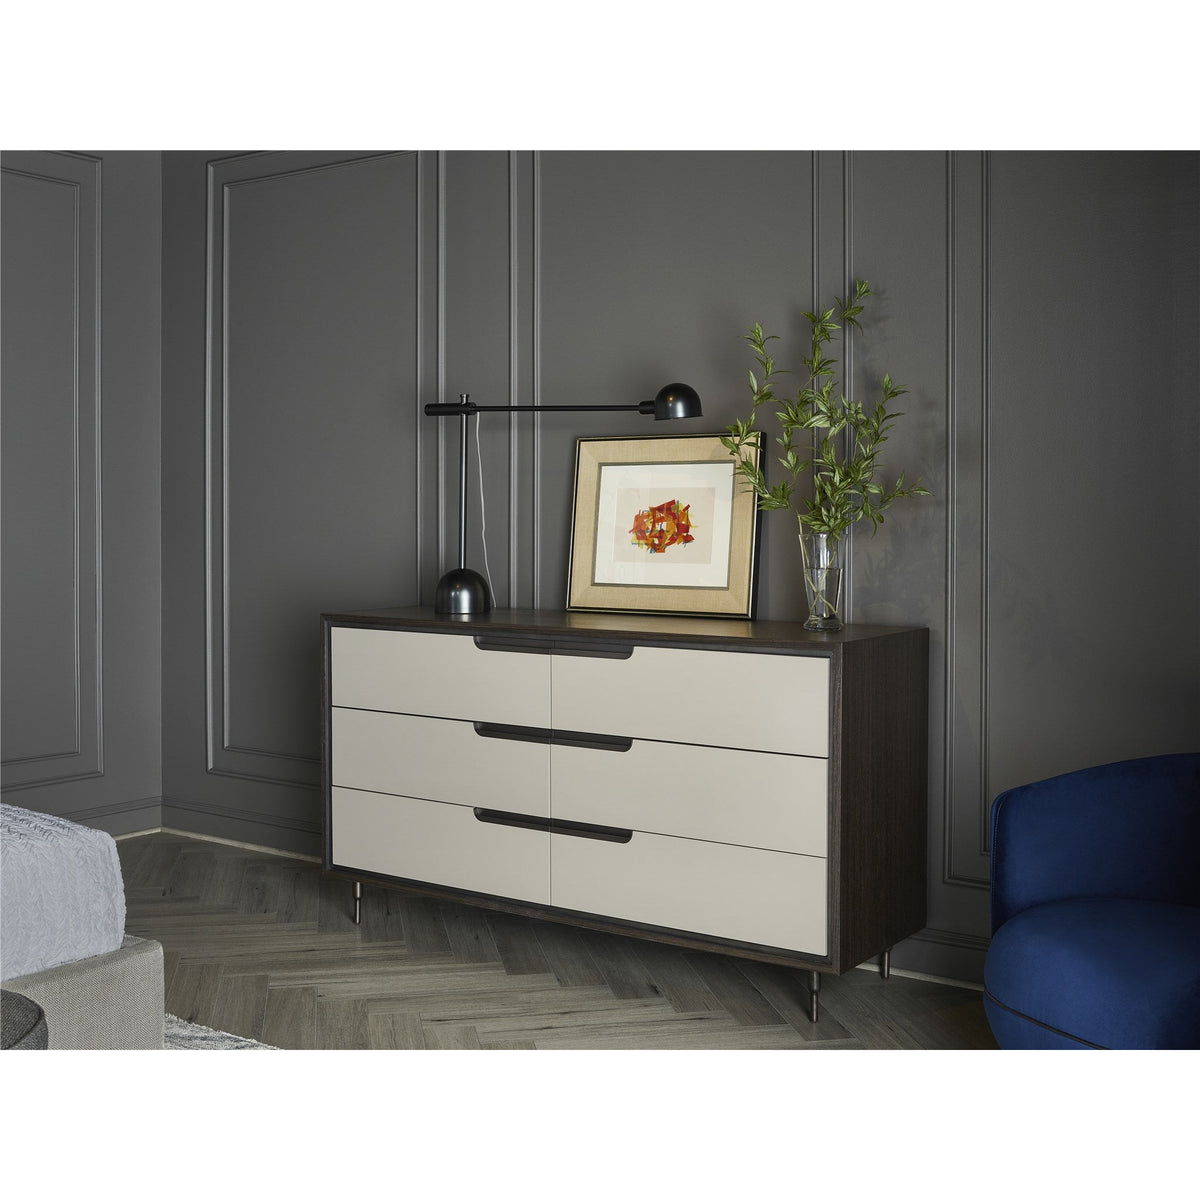 Degas Dresser - Be Bold Furniture